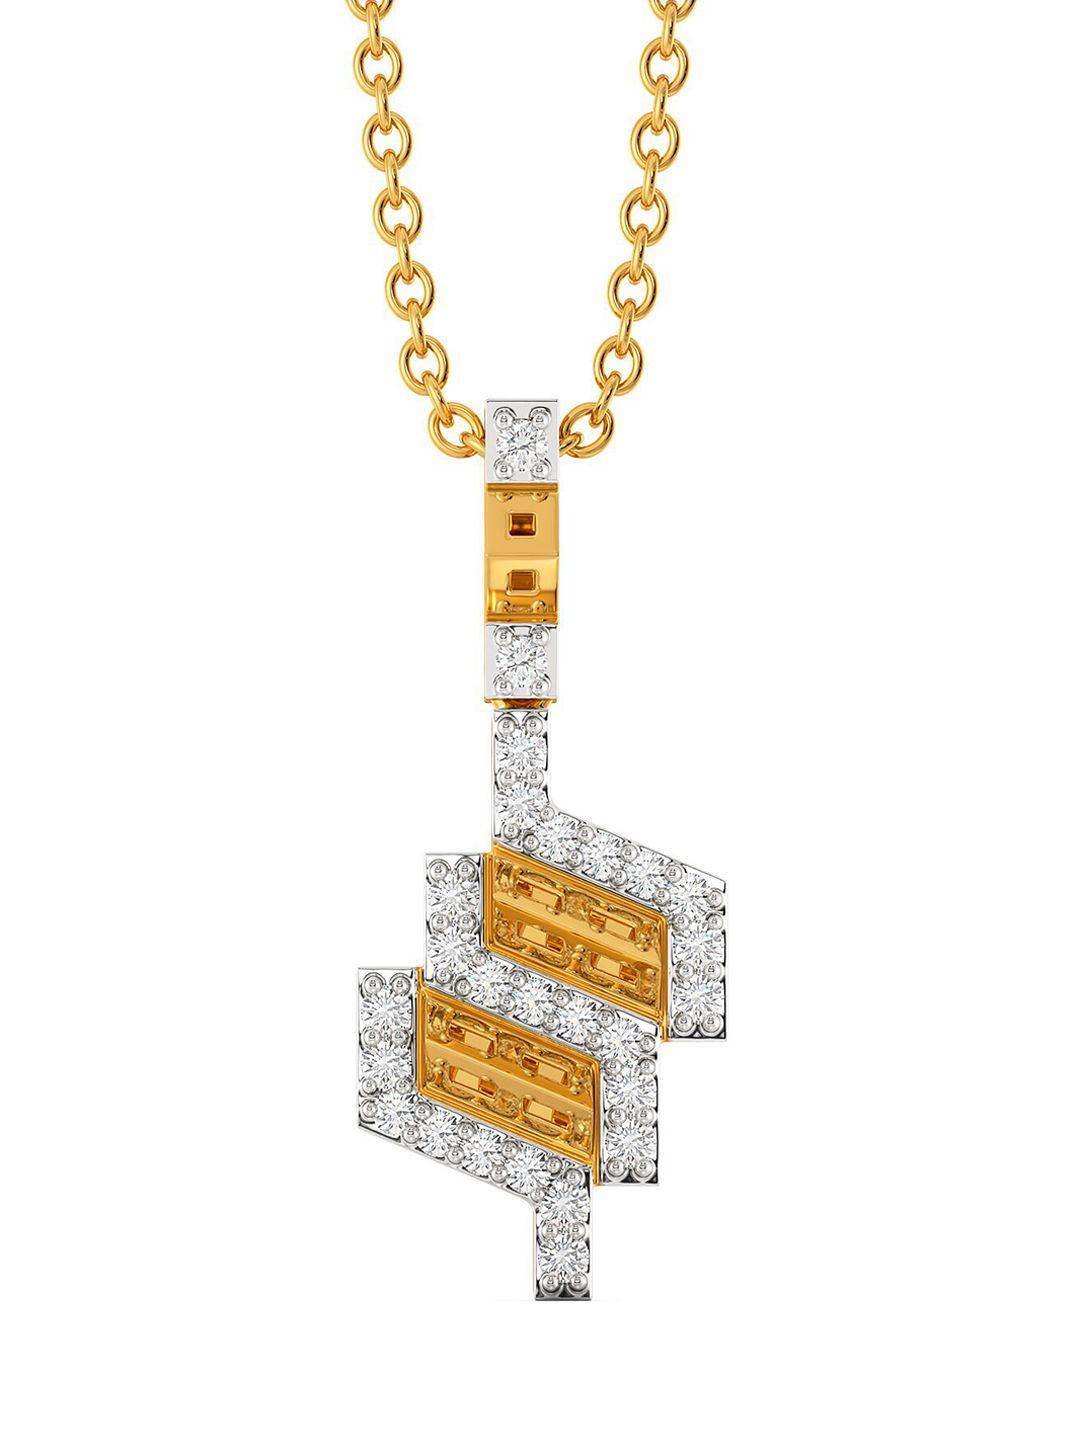 melorra sleek segments rhodium-plated 18kt gold diamond-studded pendant - 2.11 gm